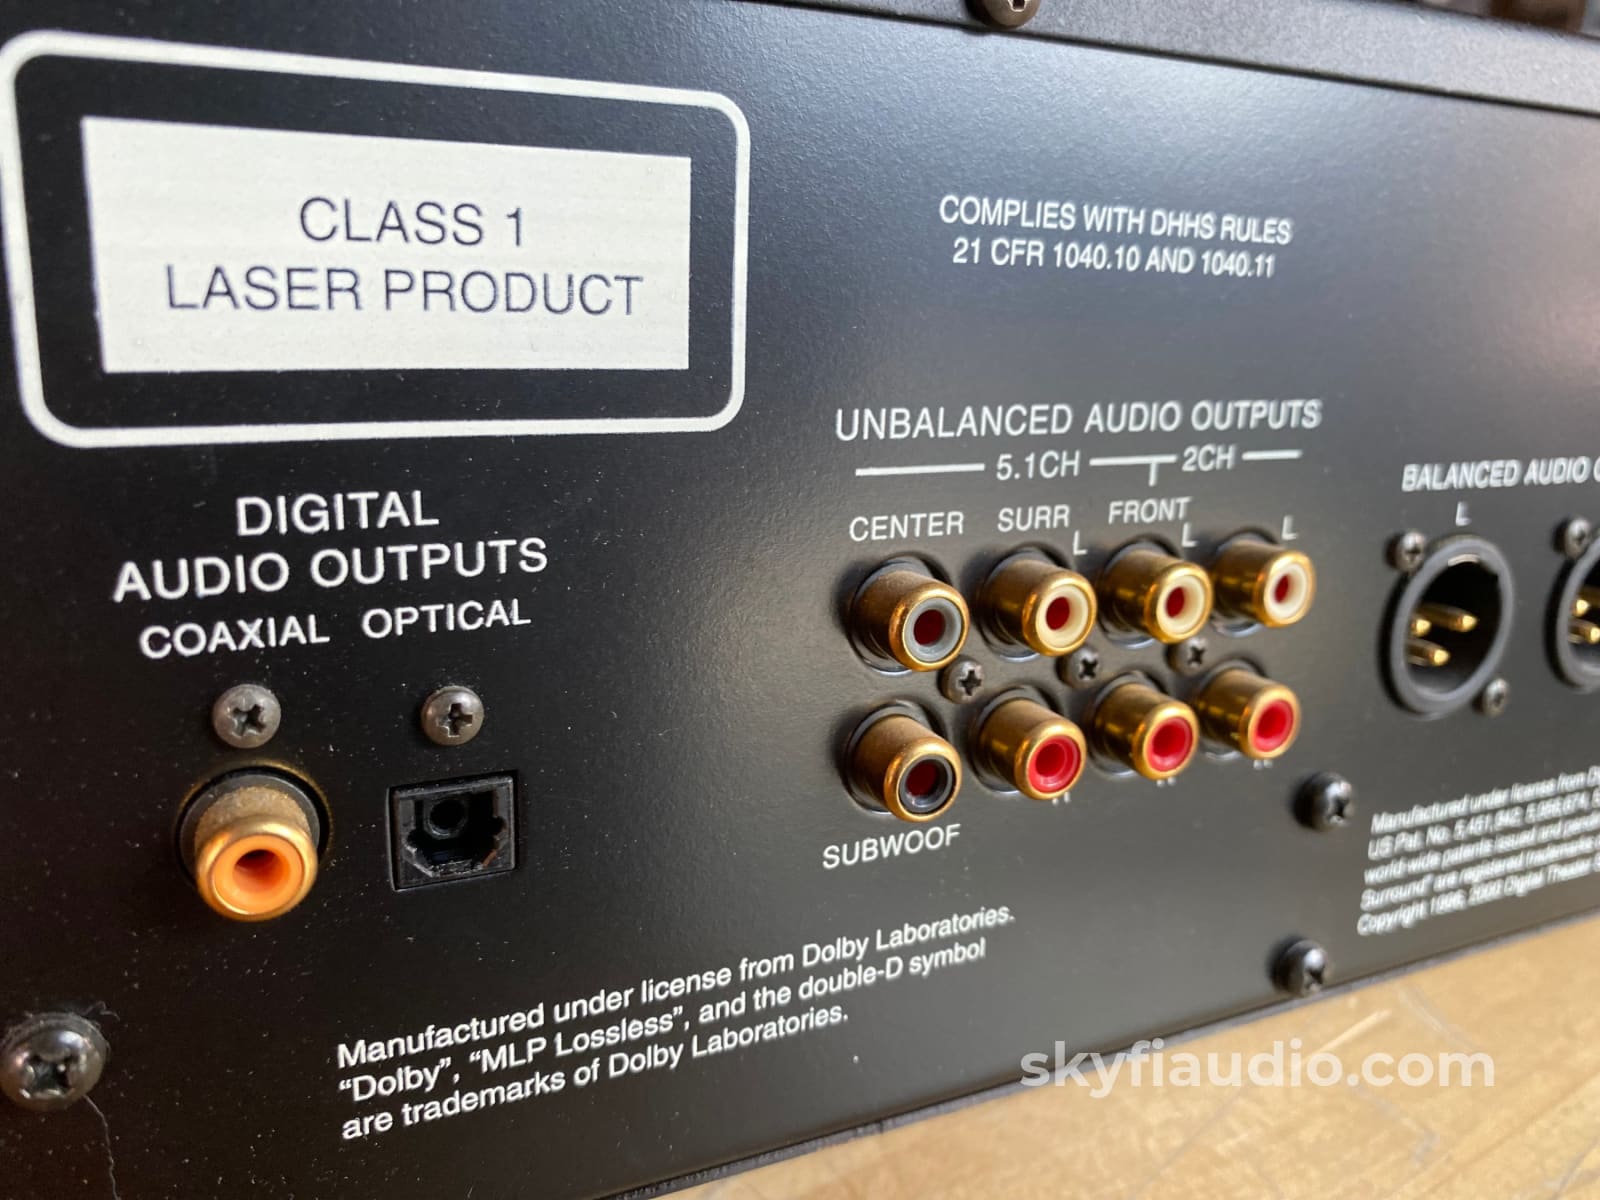 Mcintosh Mvp-851 Audio Upsampling Cd Player With 24-Bitt Burr Brown Dacs + Digital